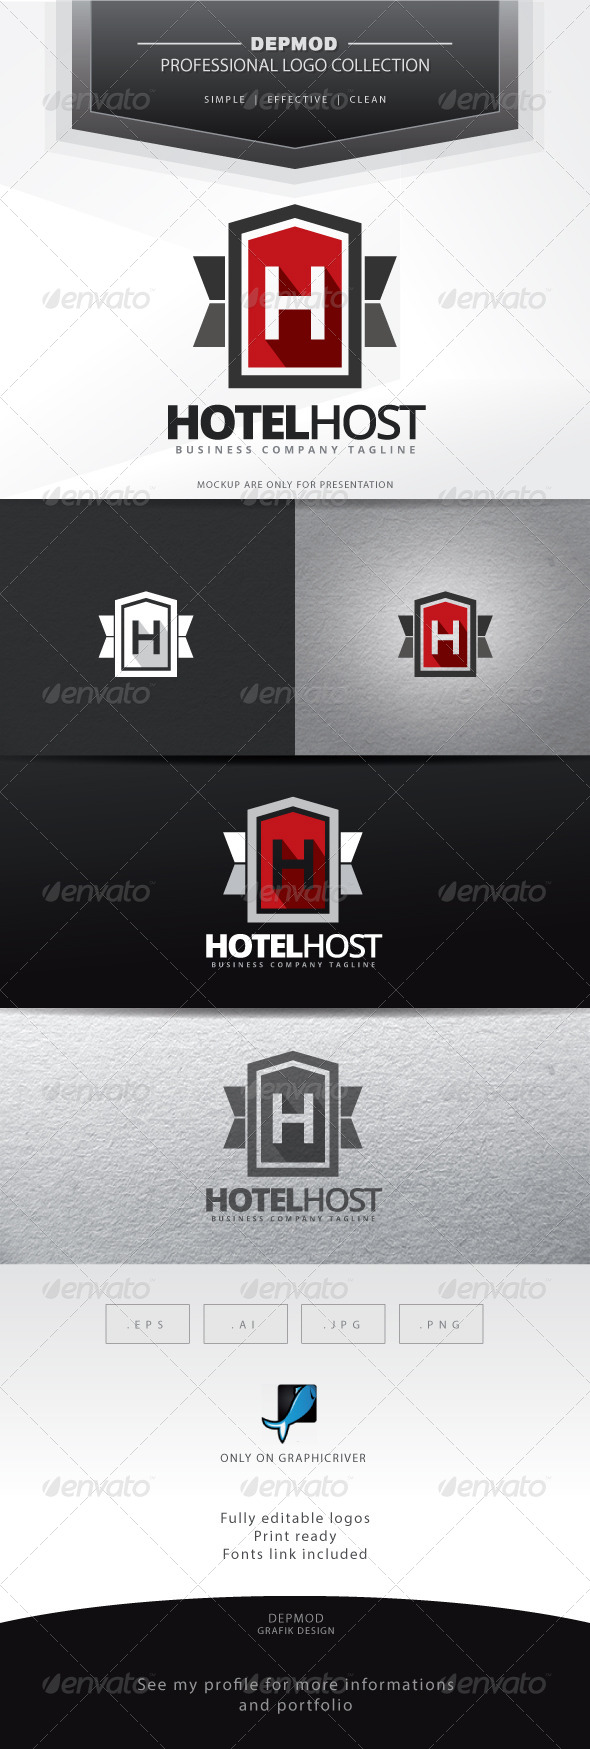 Hotel Host Logo